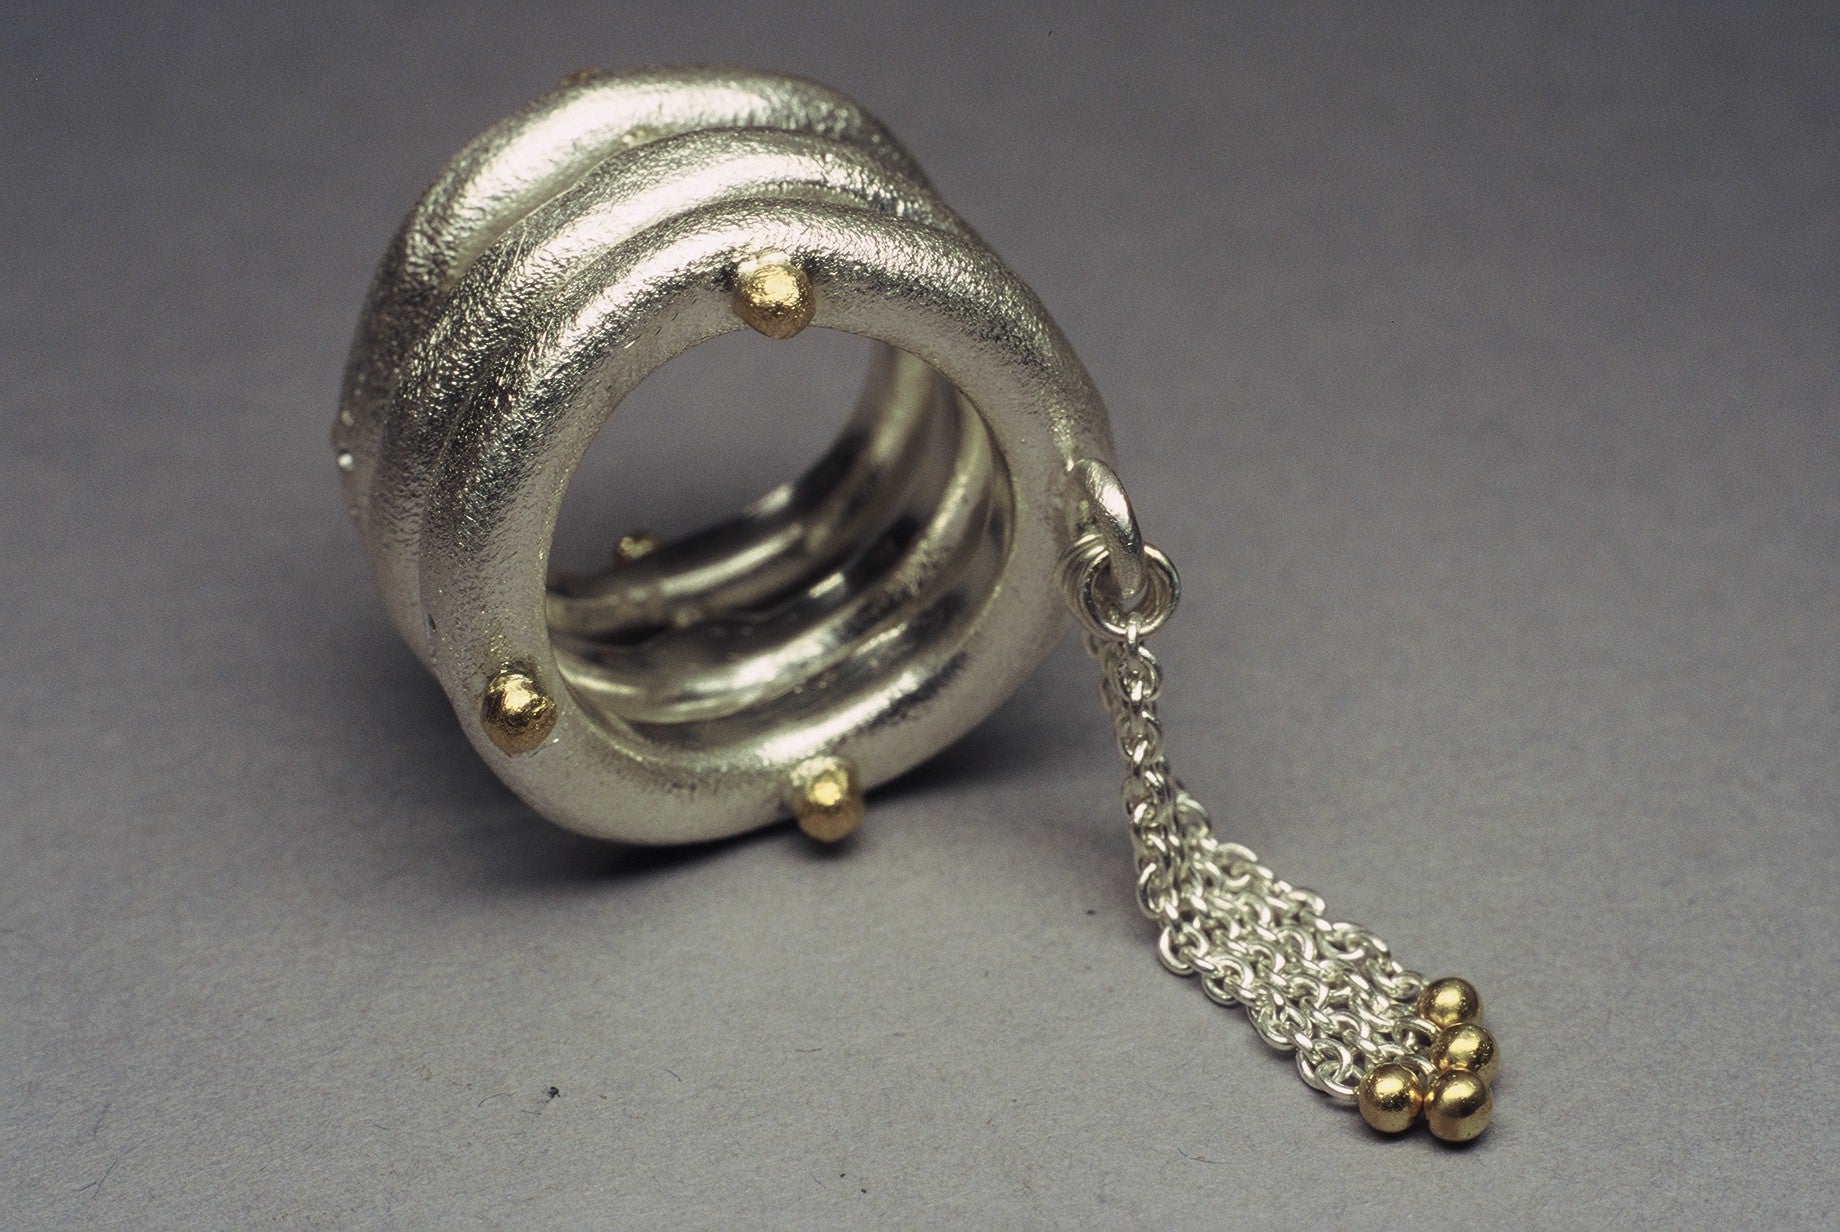 Pure & Precious! Unique ring in the purest metals